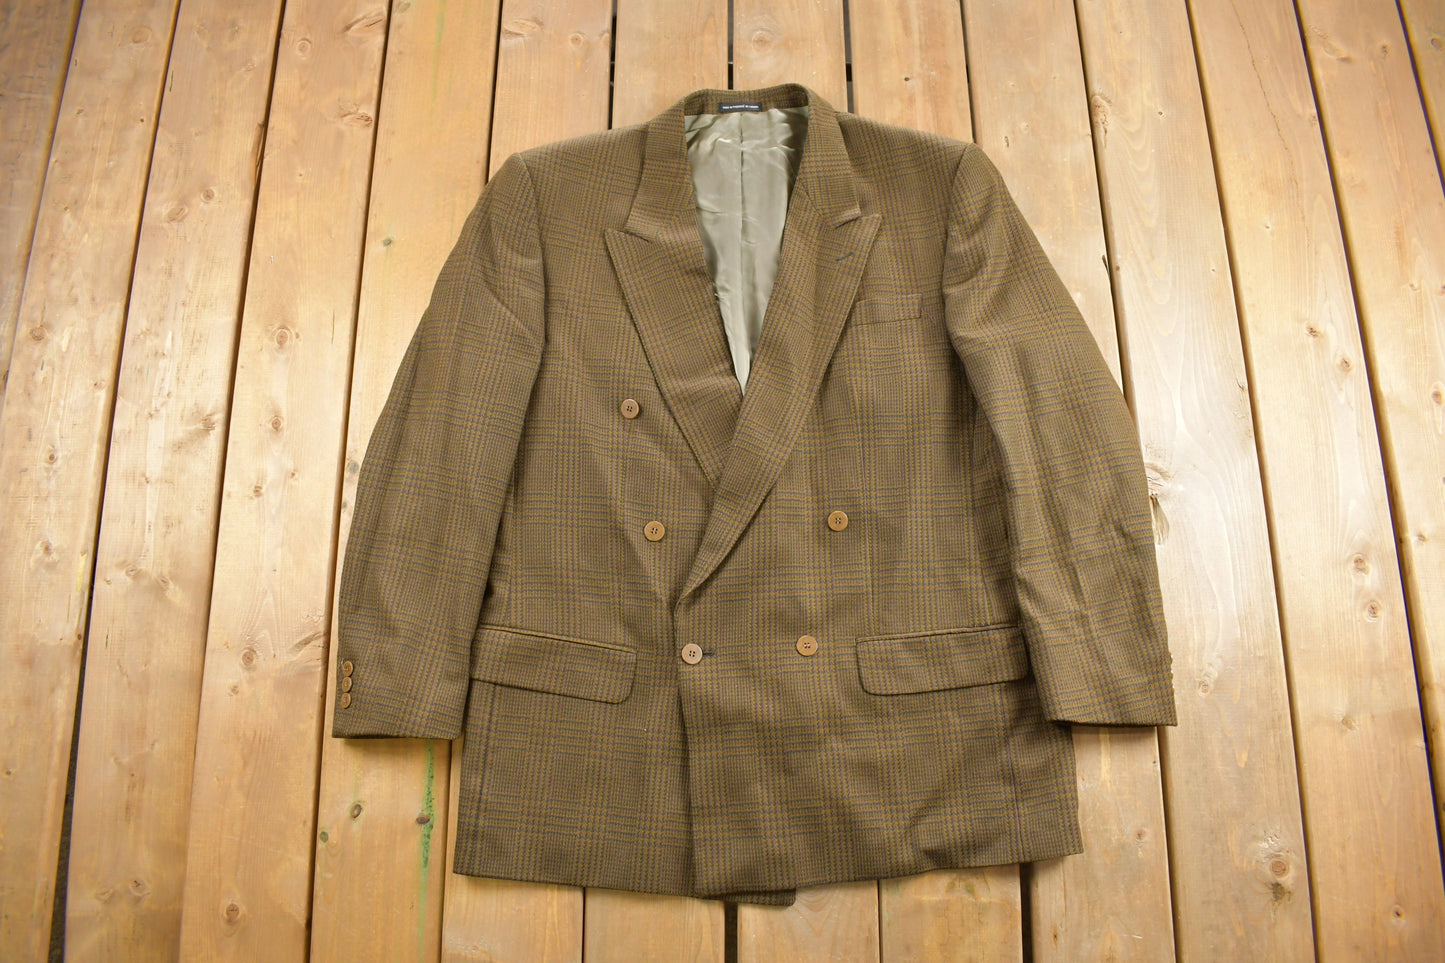 Vintage 1980s Plaid Wool Blazer / Christian Dumas / Made in Canada / Casual Dress Wear / 80s Blazer / Casanovas Spain